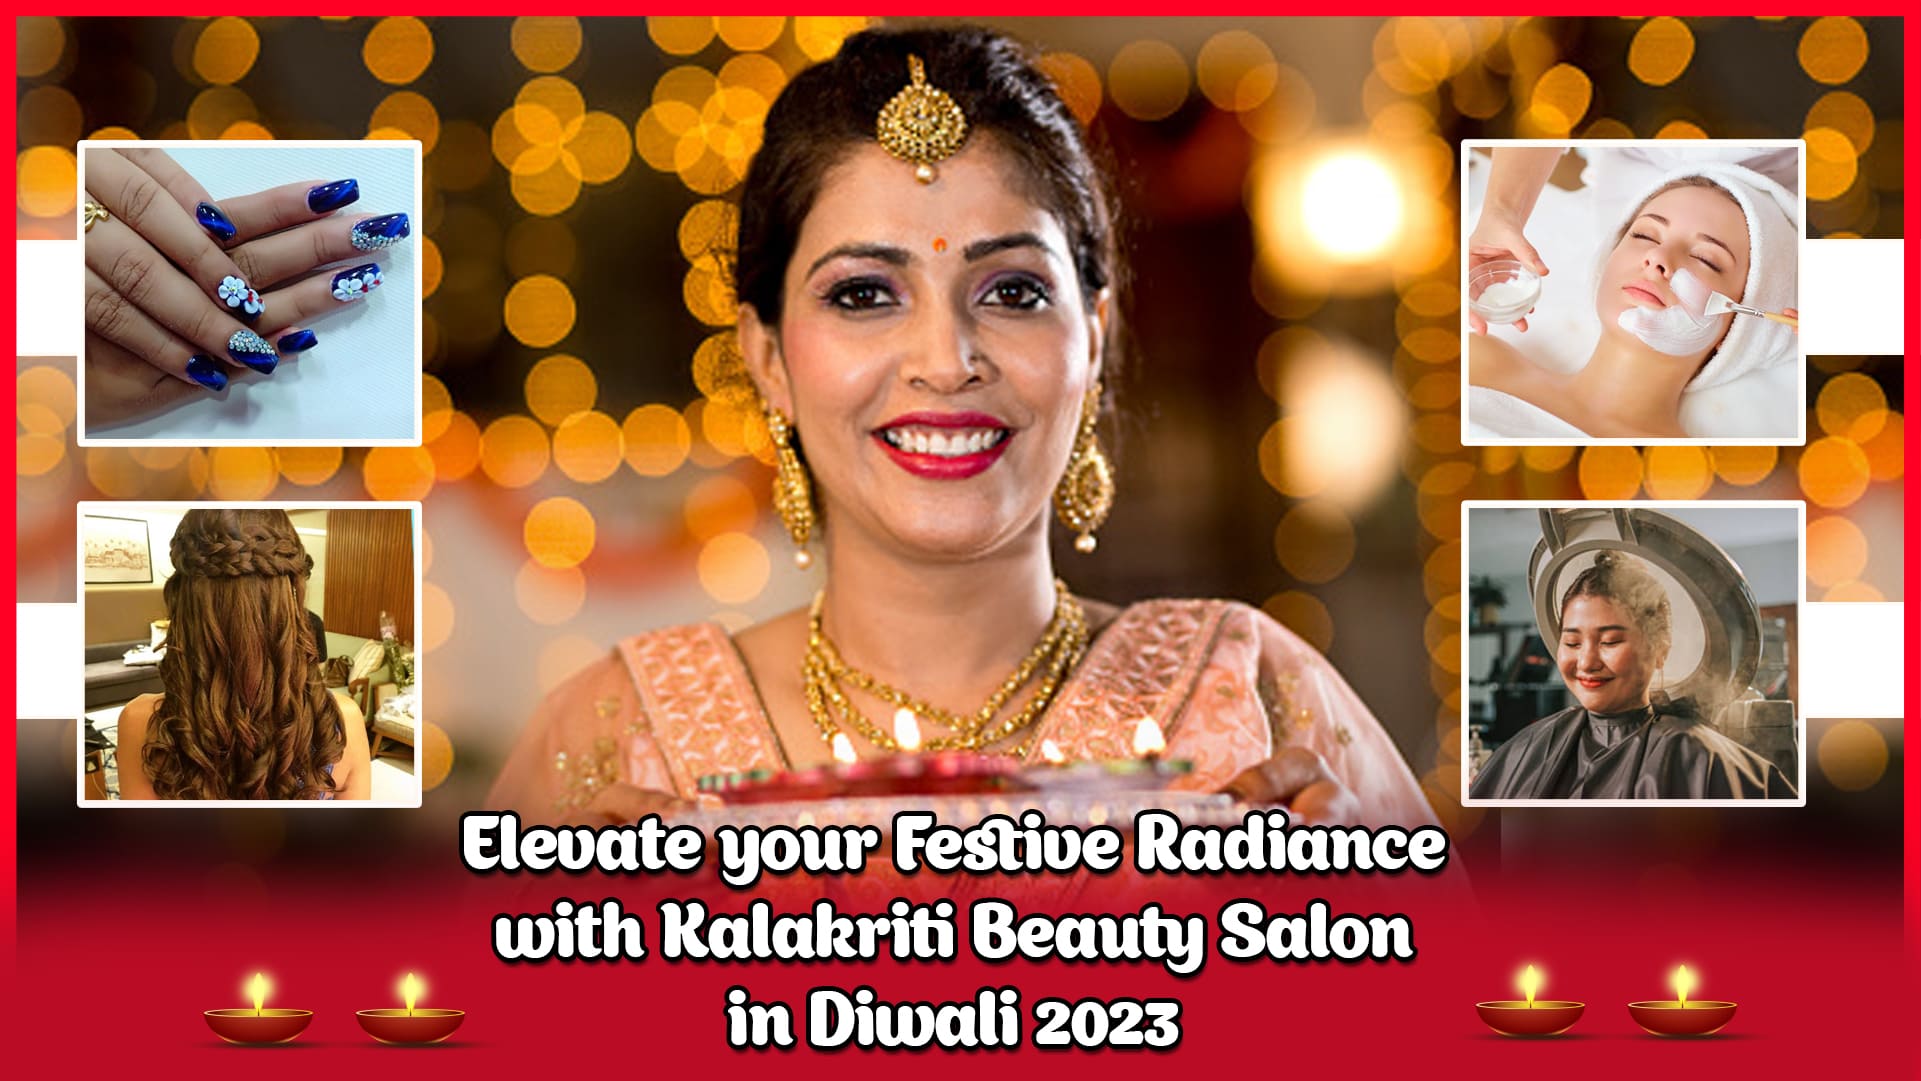 festive radiance with Kalakriti beauty salon in Diwali 2023